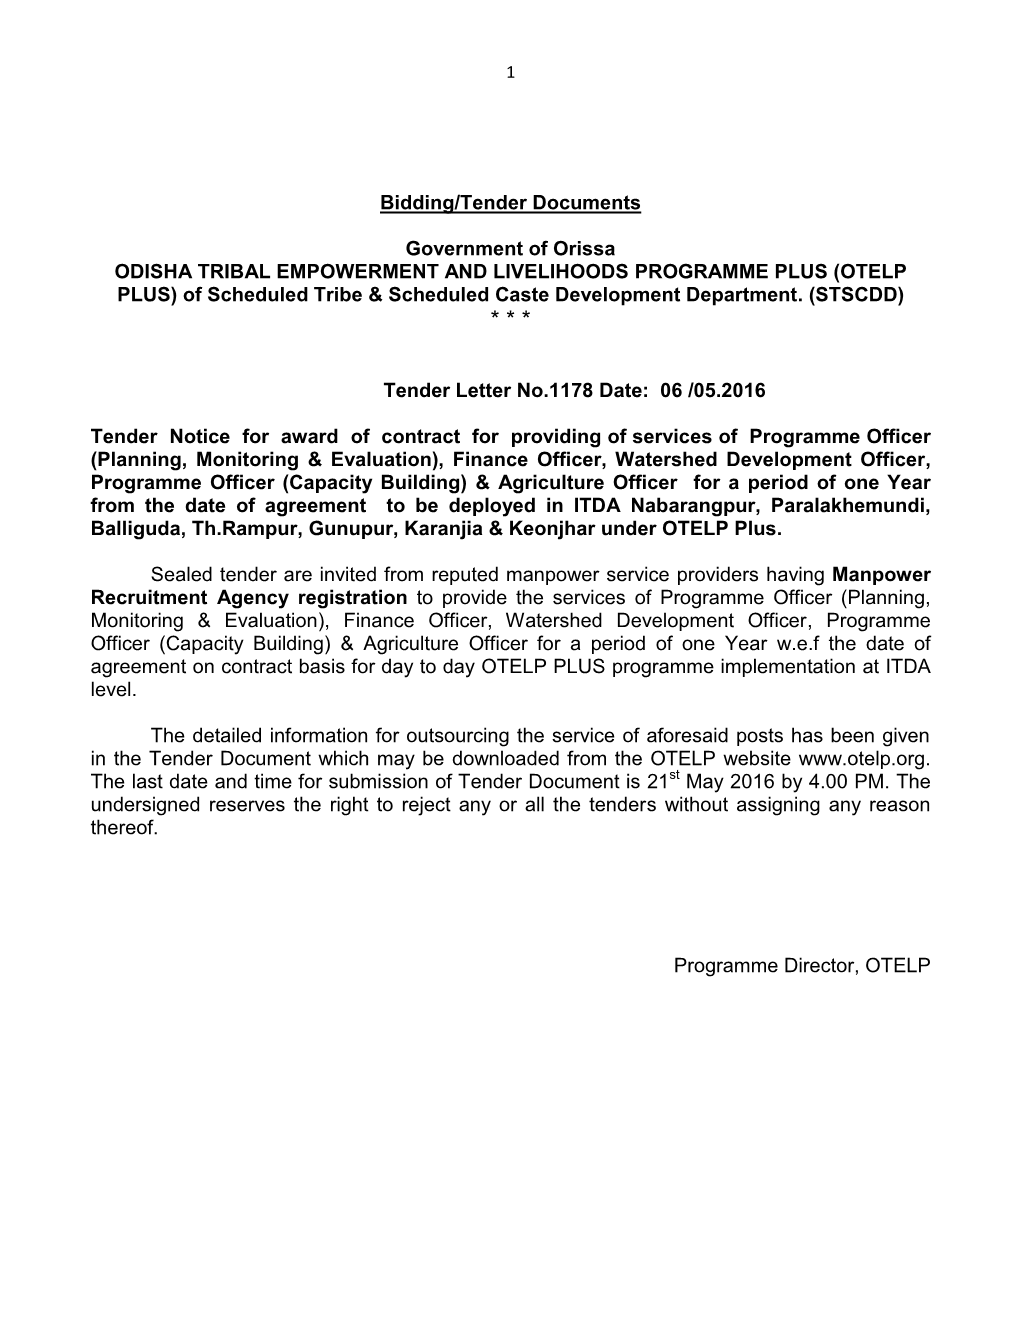 Bidding/Tender Documents Government of Orissa ODISHA TRIBAL EMPOWERMENT and LIVELIHOODS PROGRAMME PLUS (OTELP PLUS) of Scheduled